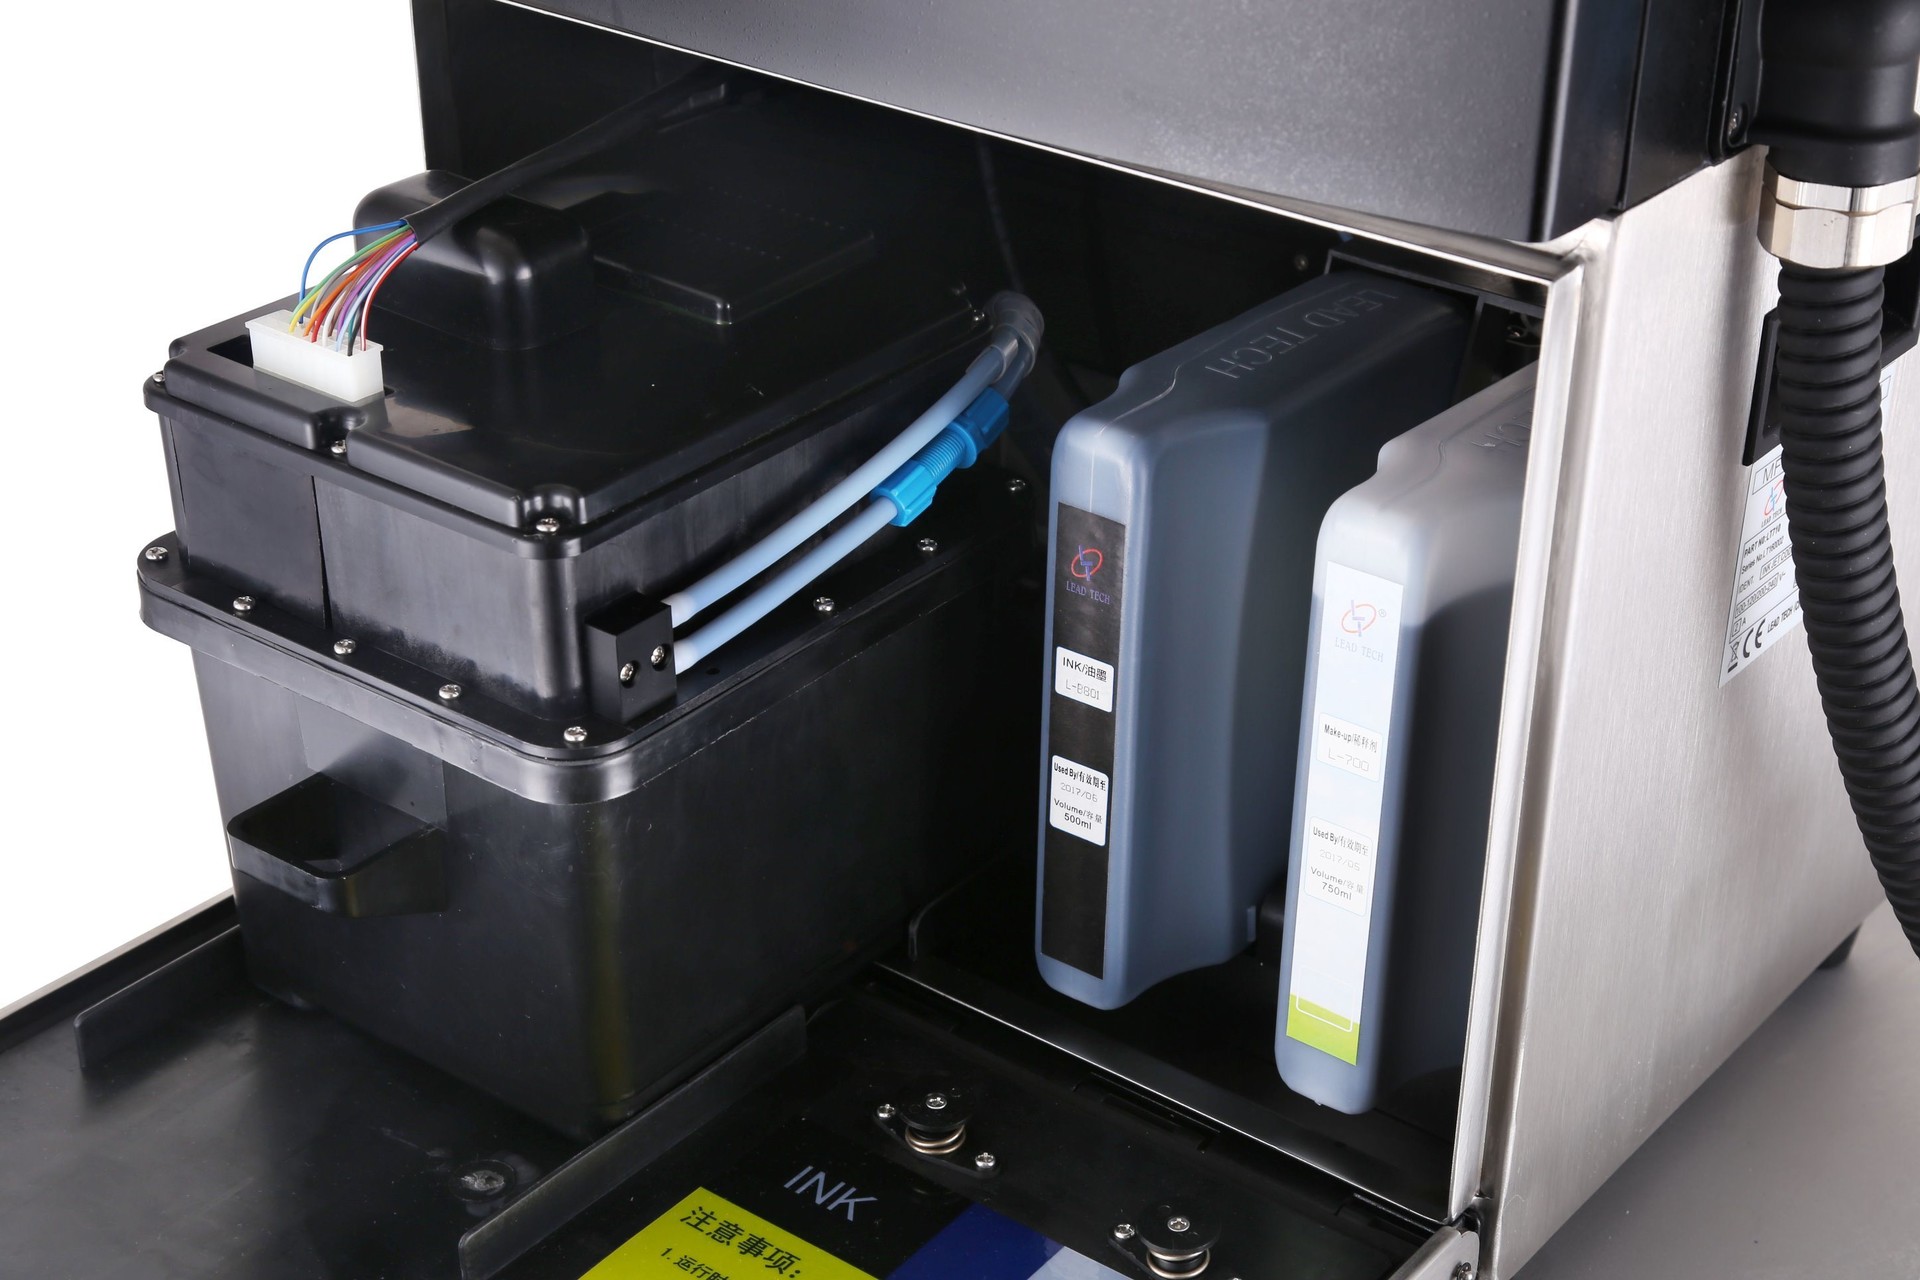 Lead Tech Lt760 HDPE Coding Continuous Cij Inkjet Printer